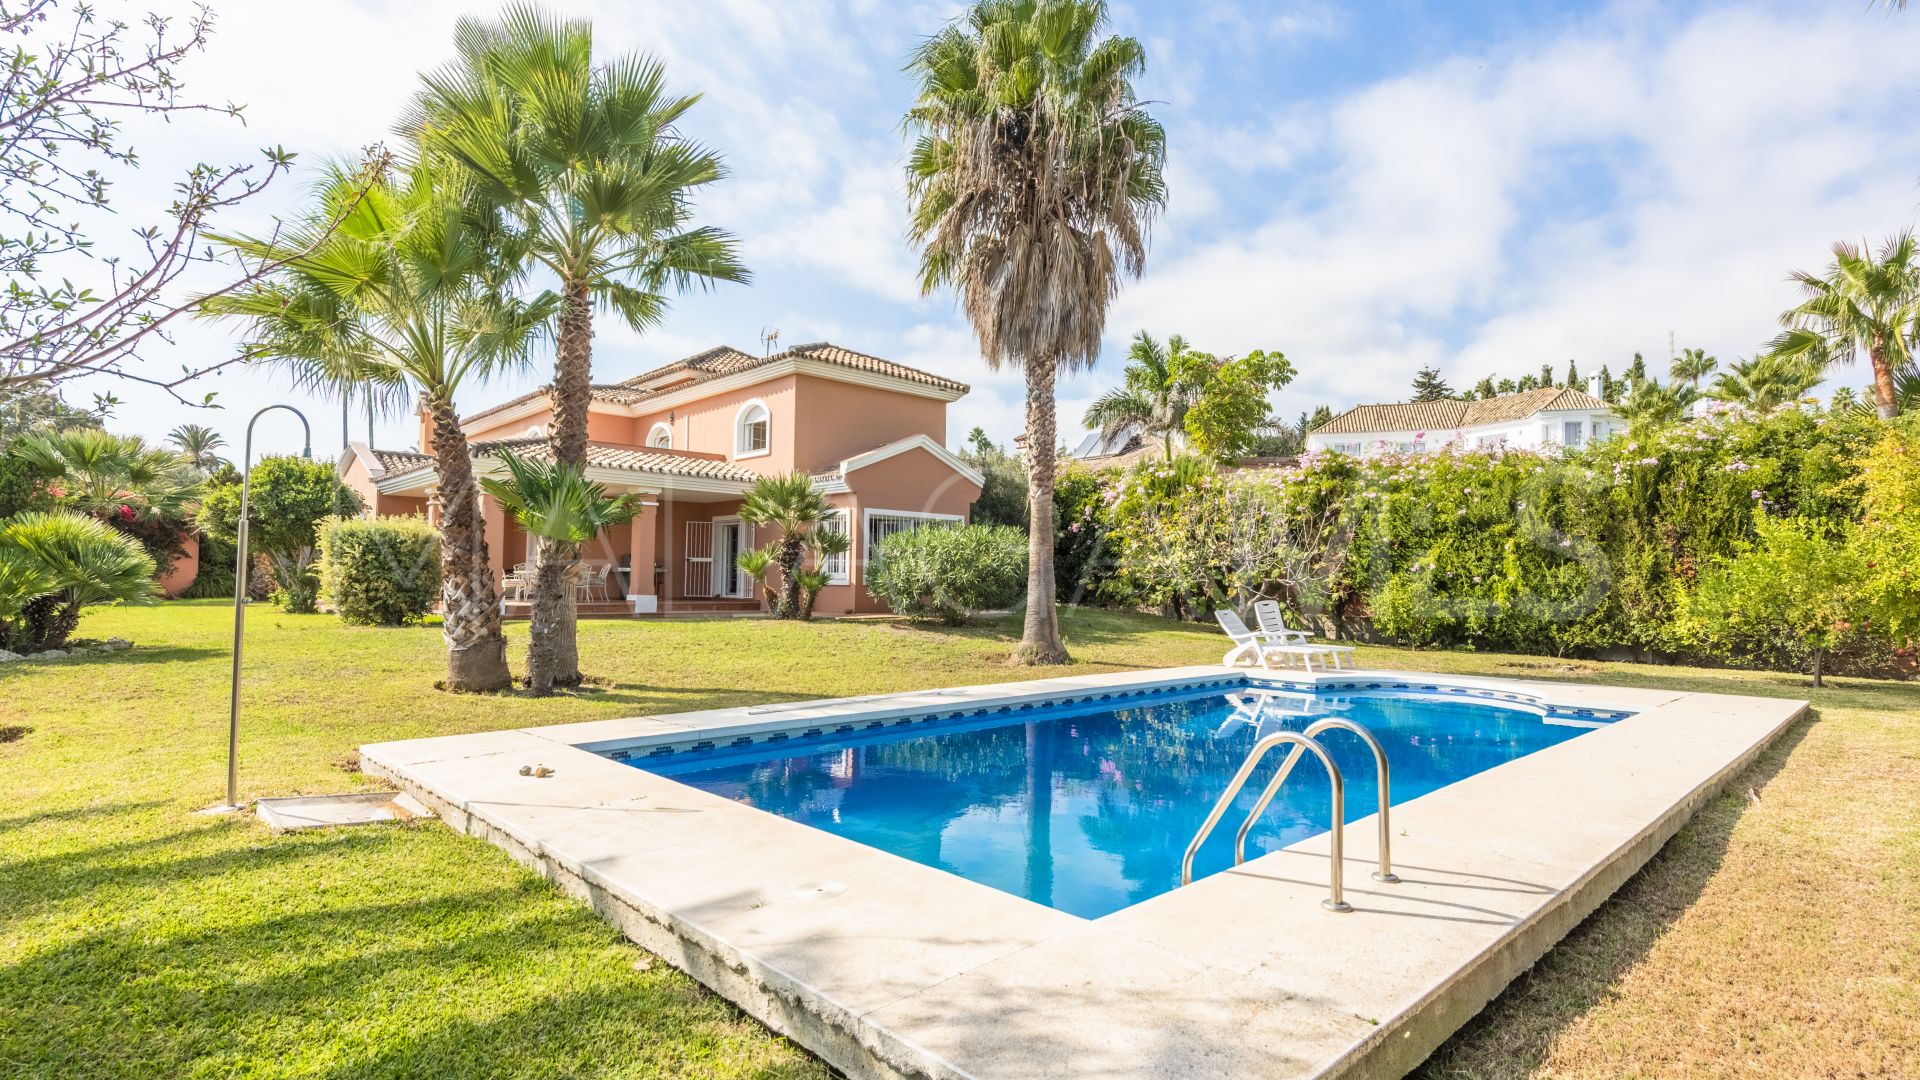 Villa for sale in La Gaspara